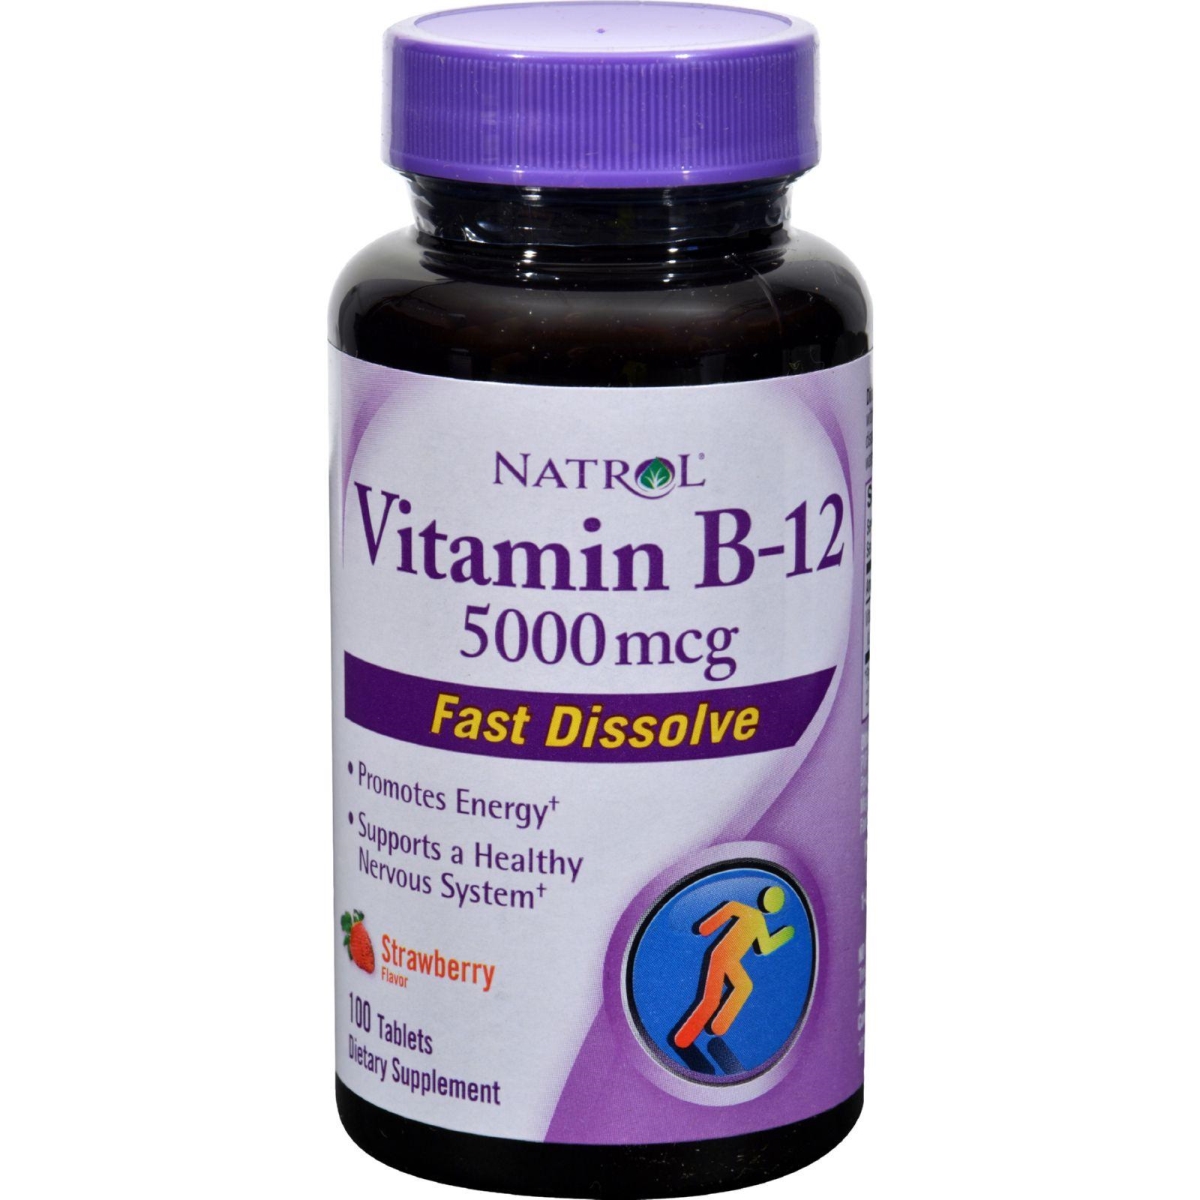 Picture of Natrol HG1233022 5000 mcg Fast Dissolving Vitamin B12 - 100 Tablets